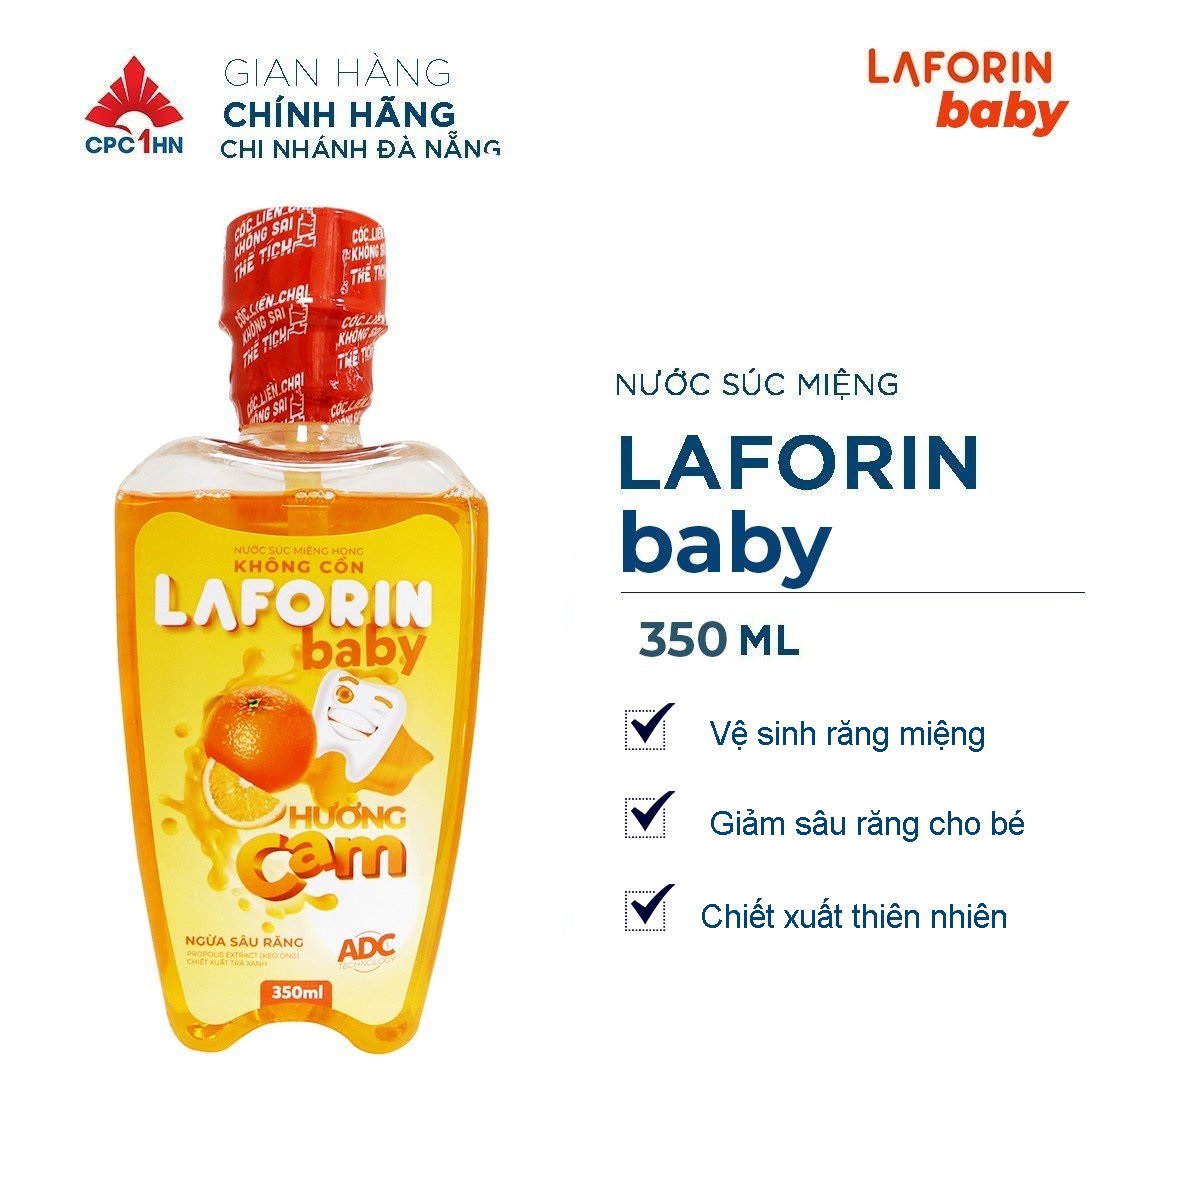 Mouthwash laforin baby orange flavor New 350ml anti-caries